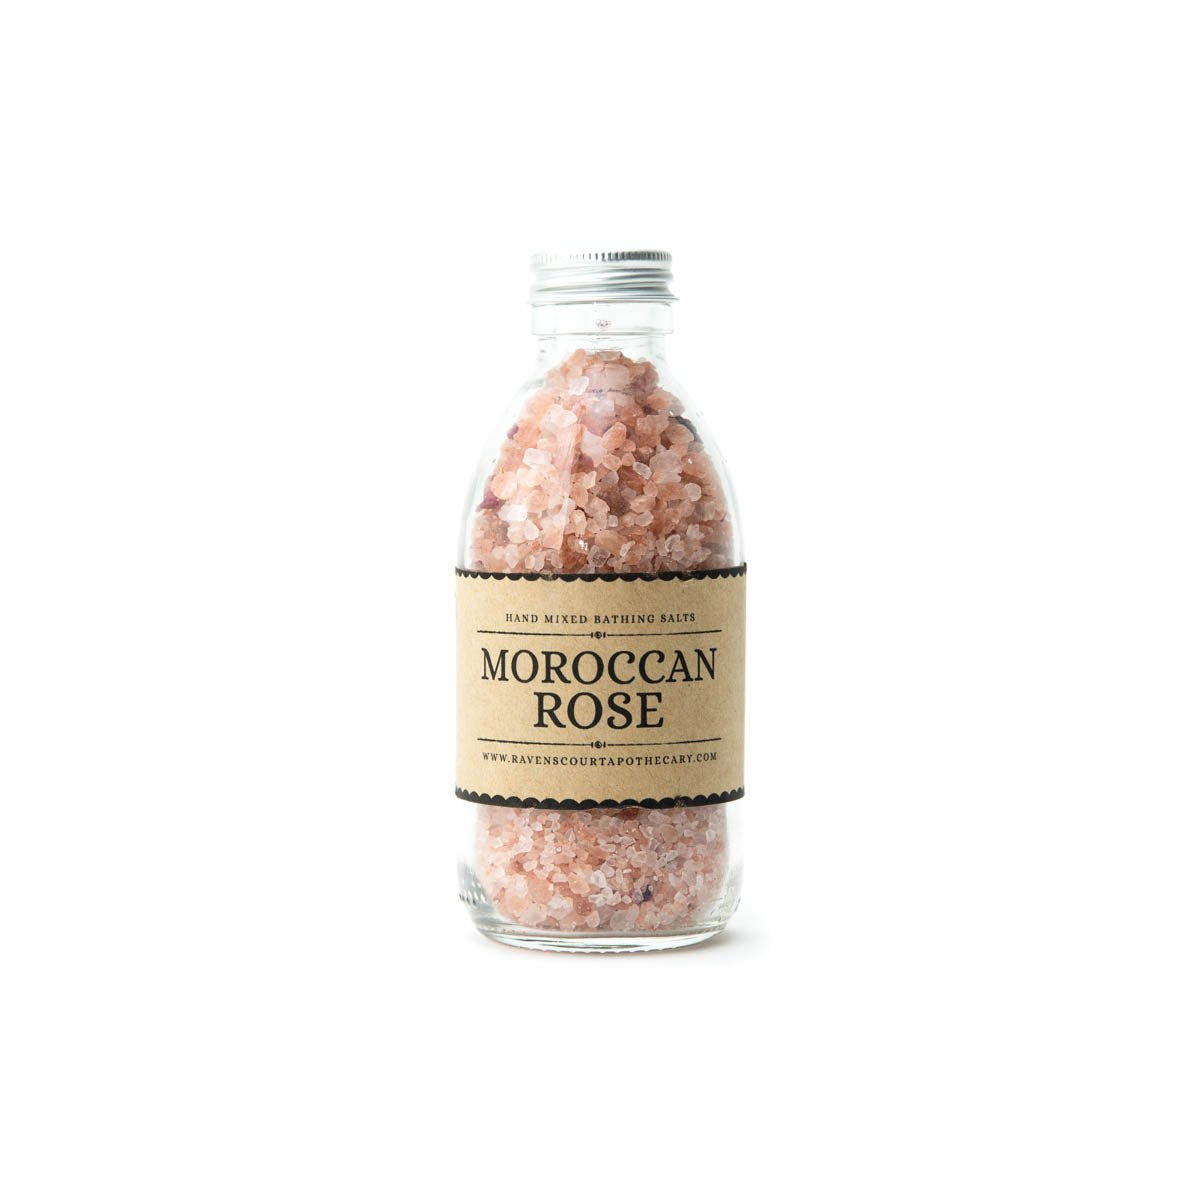 Moroccan Rose Bath Salts - The Future Kept - 1